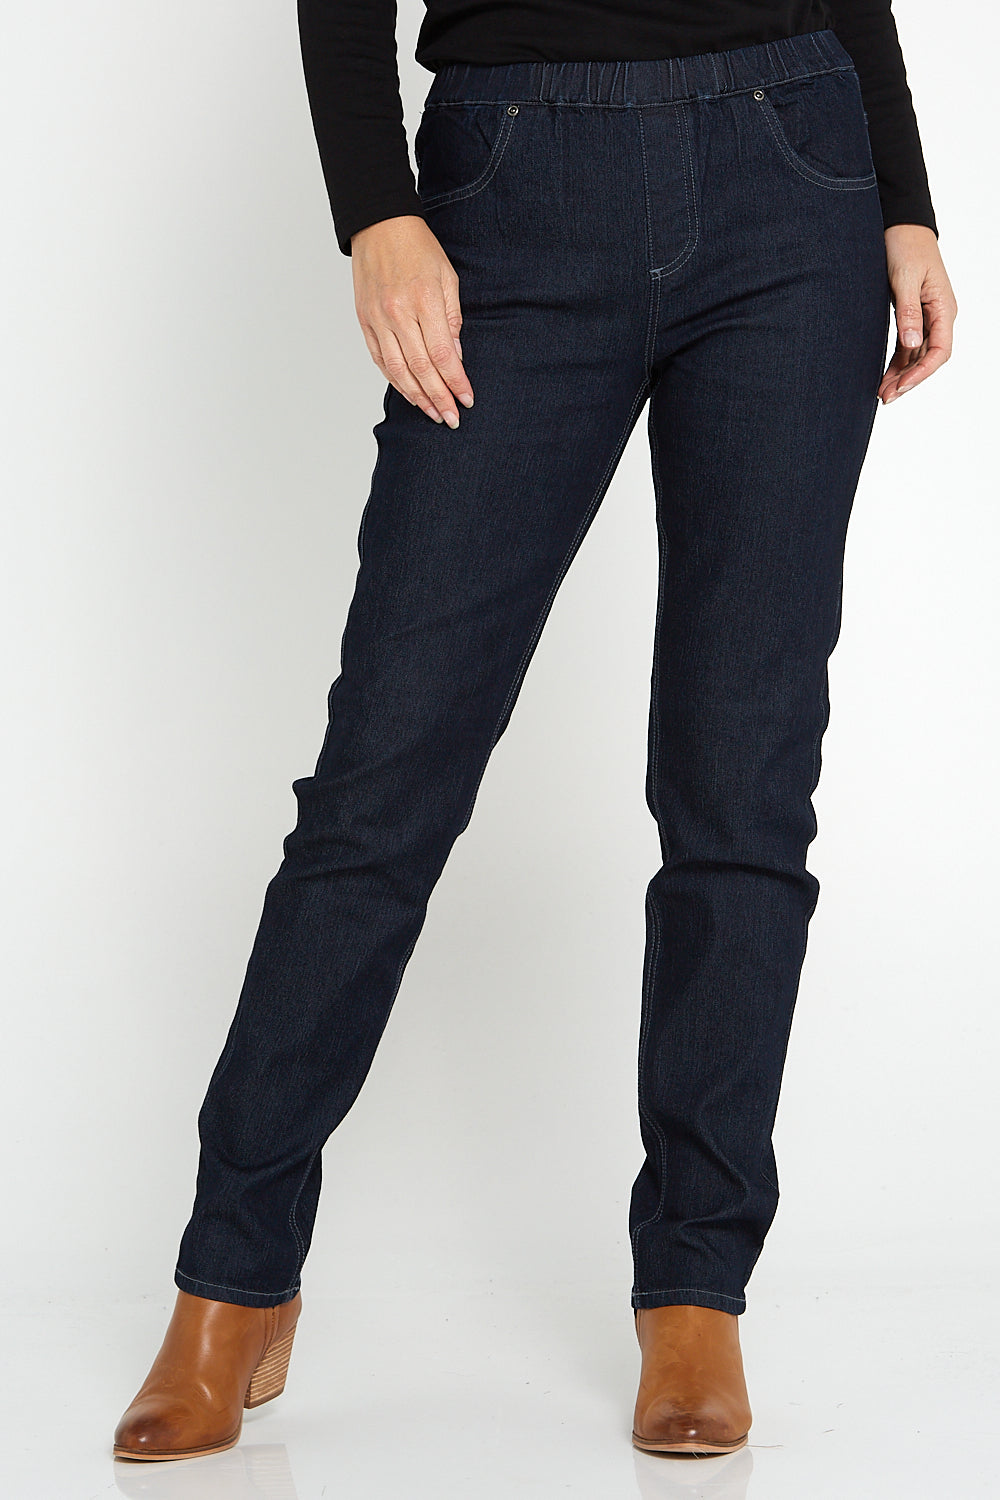 TULIO Mature Fashion, Hillwood Pull On Jeans - Dark Wash